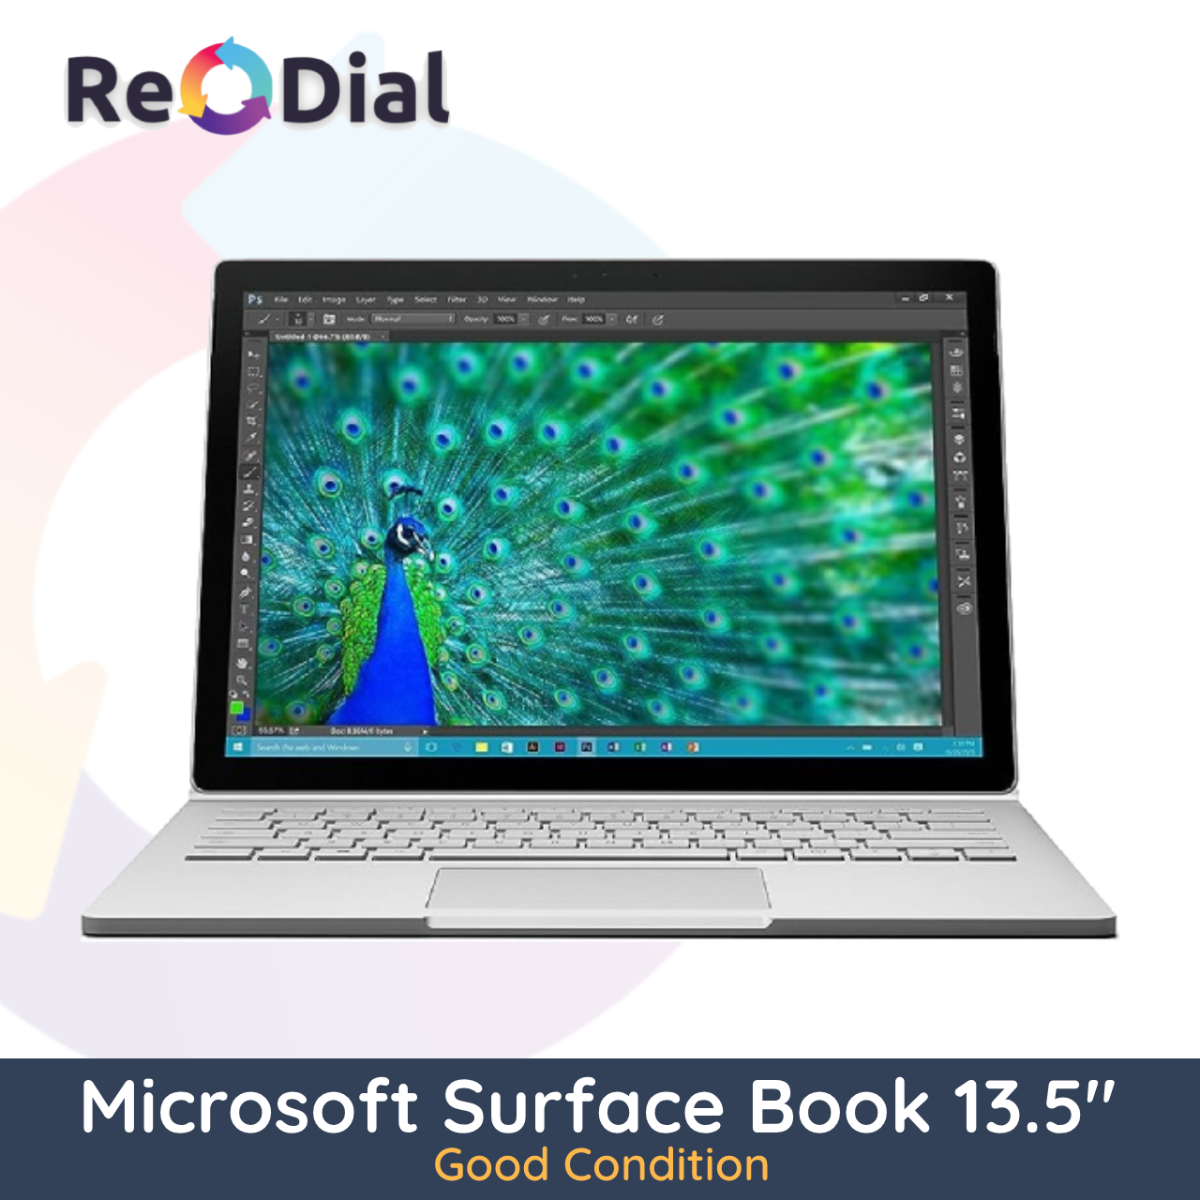 Microsoft Surface Book 13.5" Laptop i5-6300U 256GB 8GB RAM - Good Condition